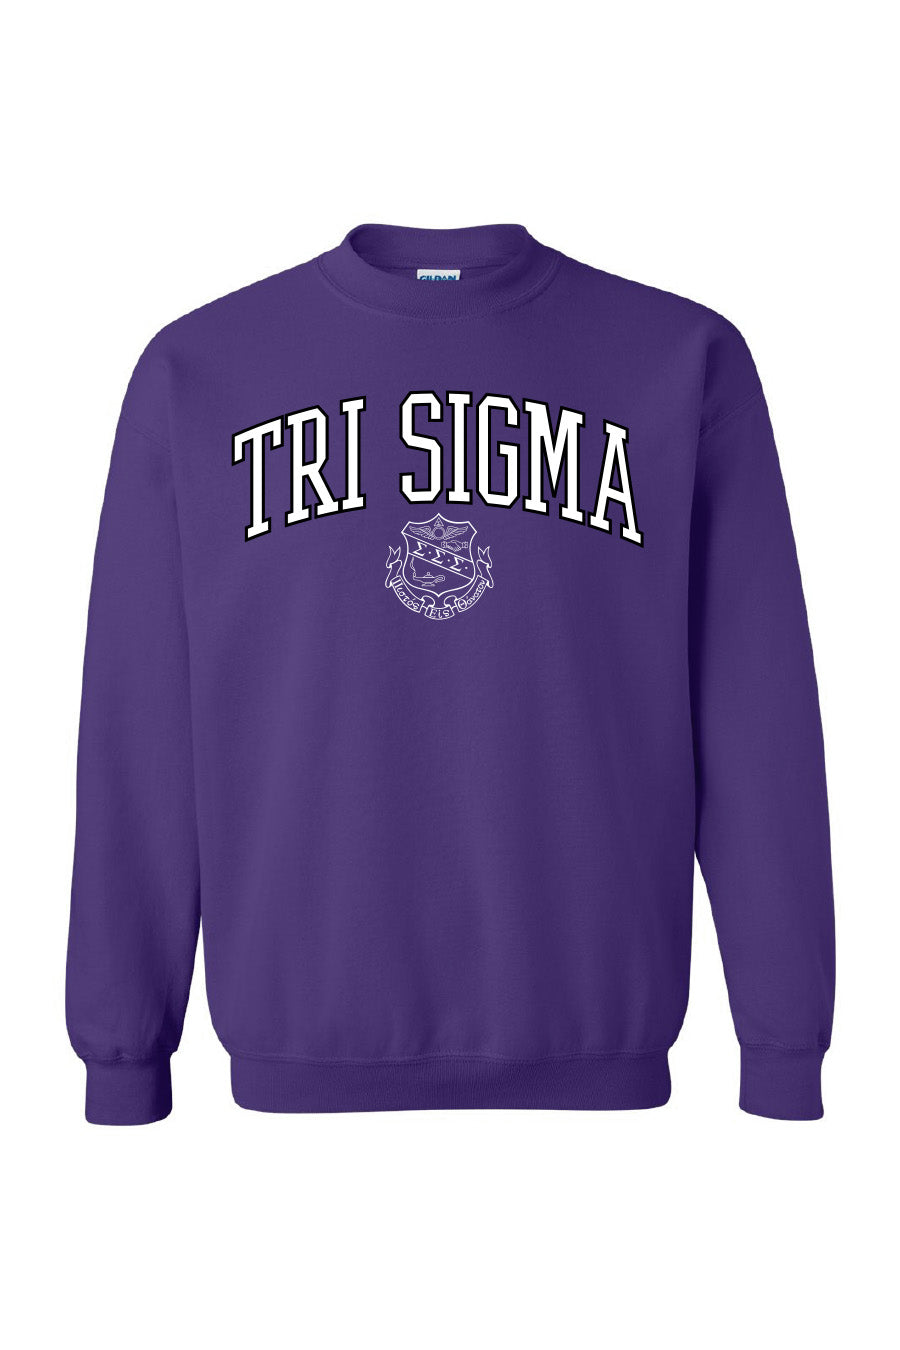 Tri Sigma Coat of Arms Crew Sweatshirt